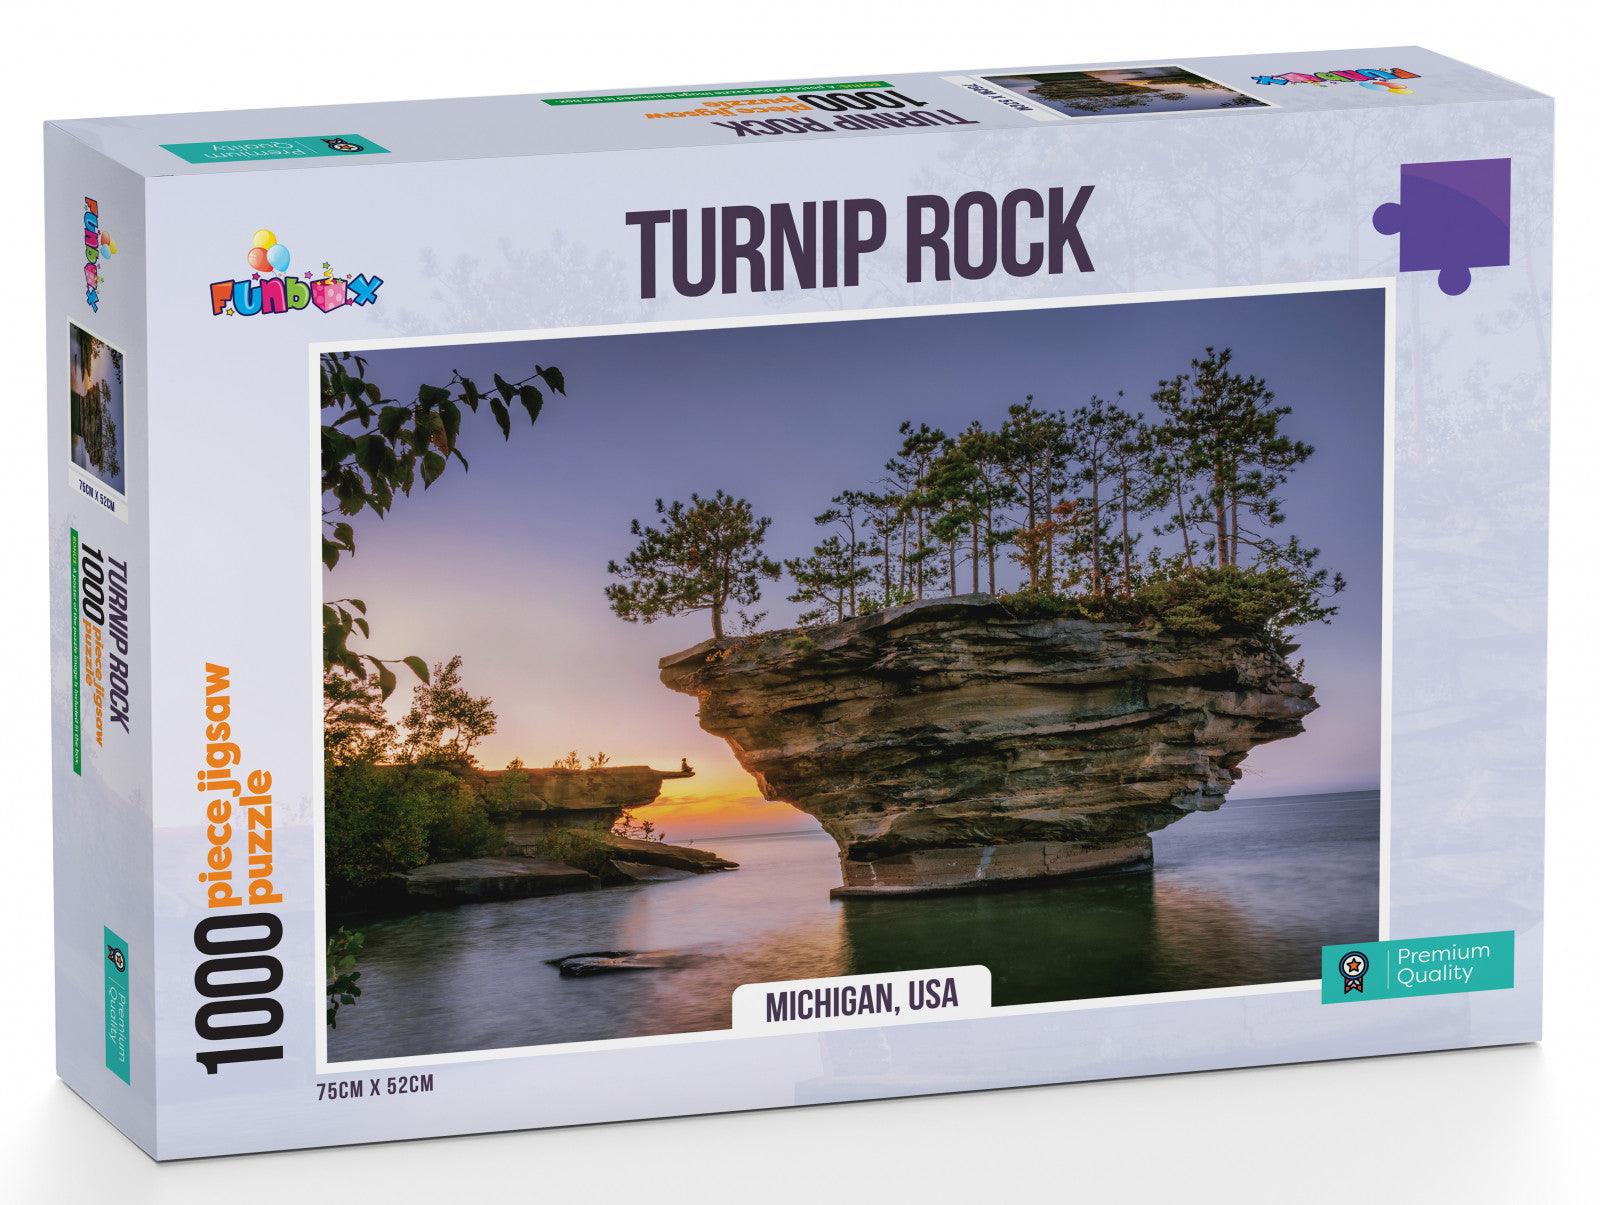 VR-84494 Funbox Puzzle Turnip Rock Michigan USA Puzzle 1,000 pieces - Funbox - Titan Pop Culture